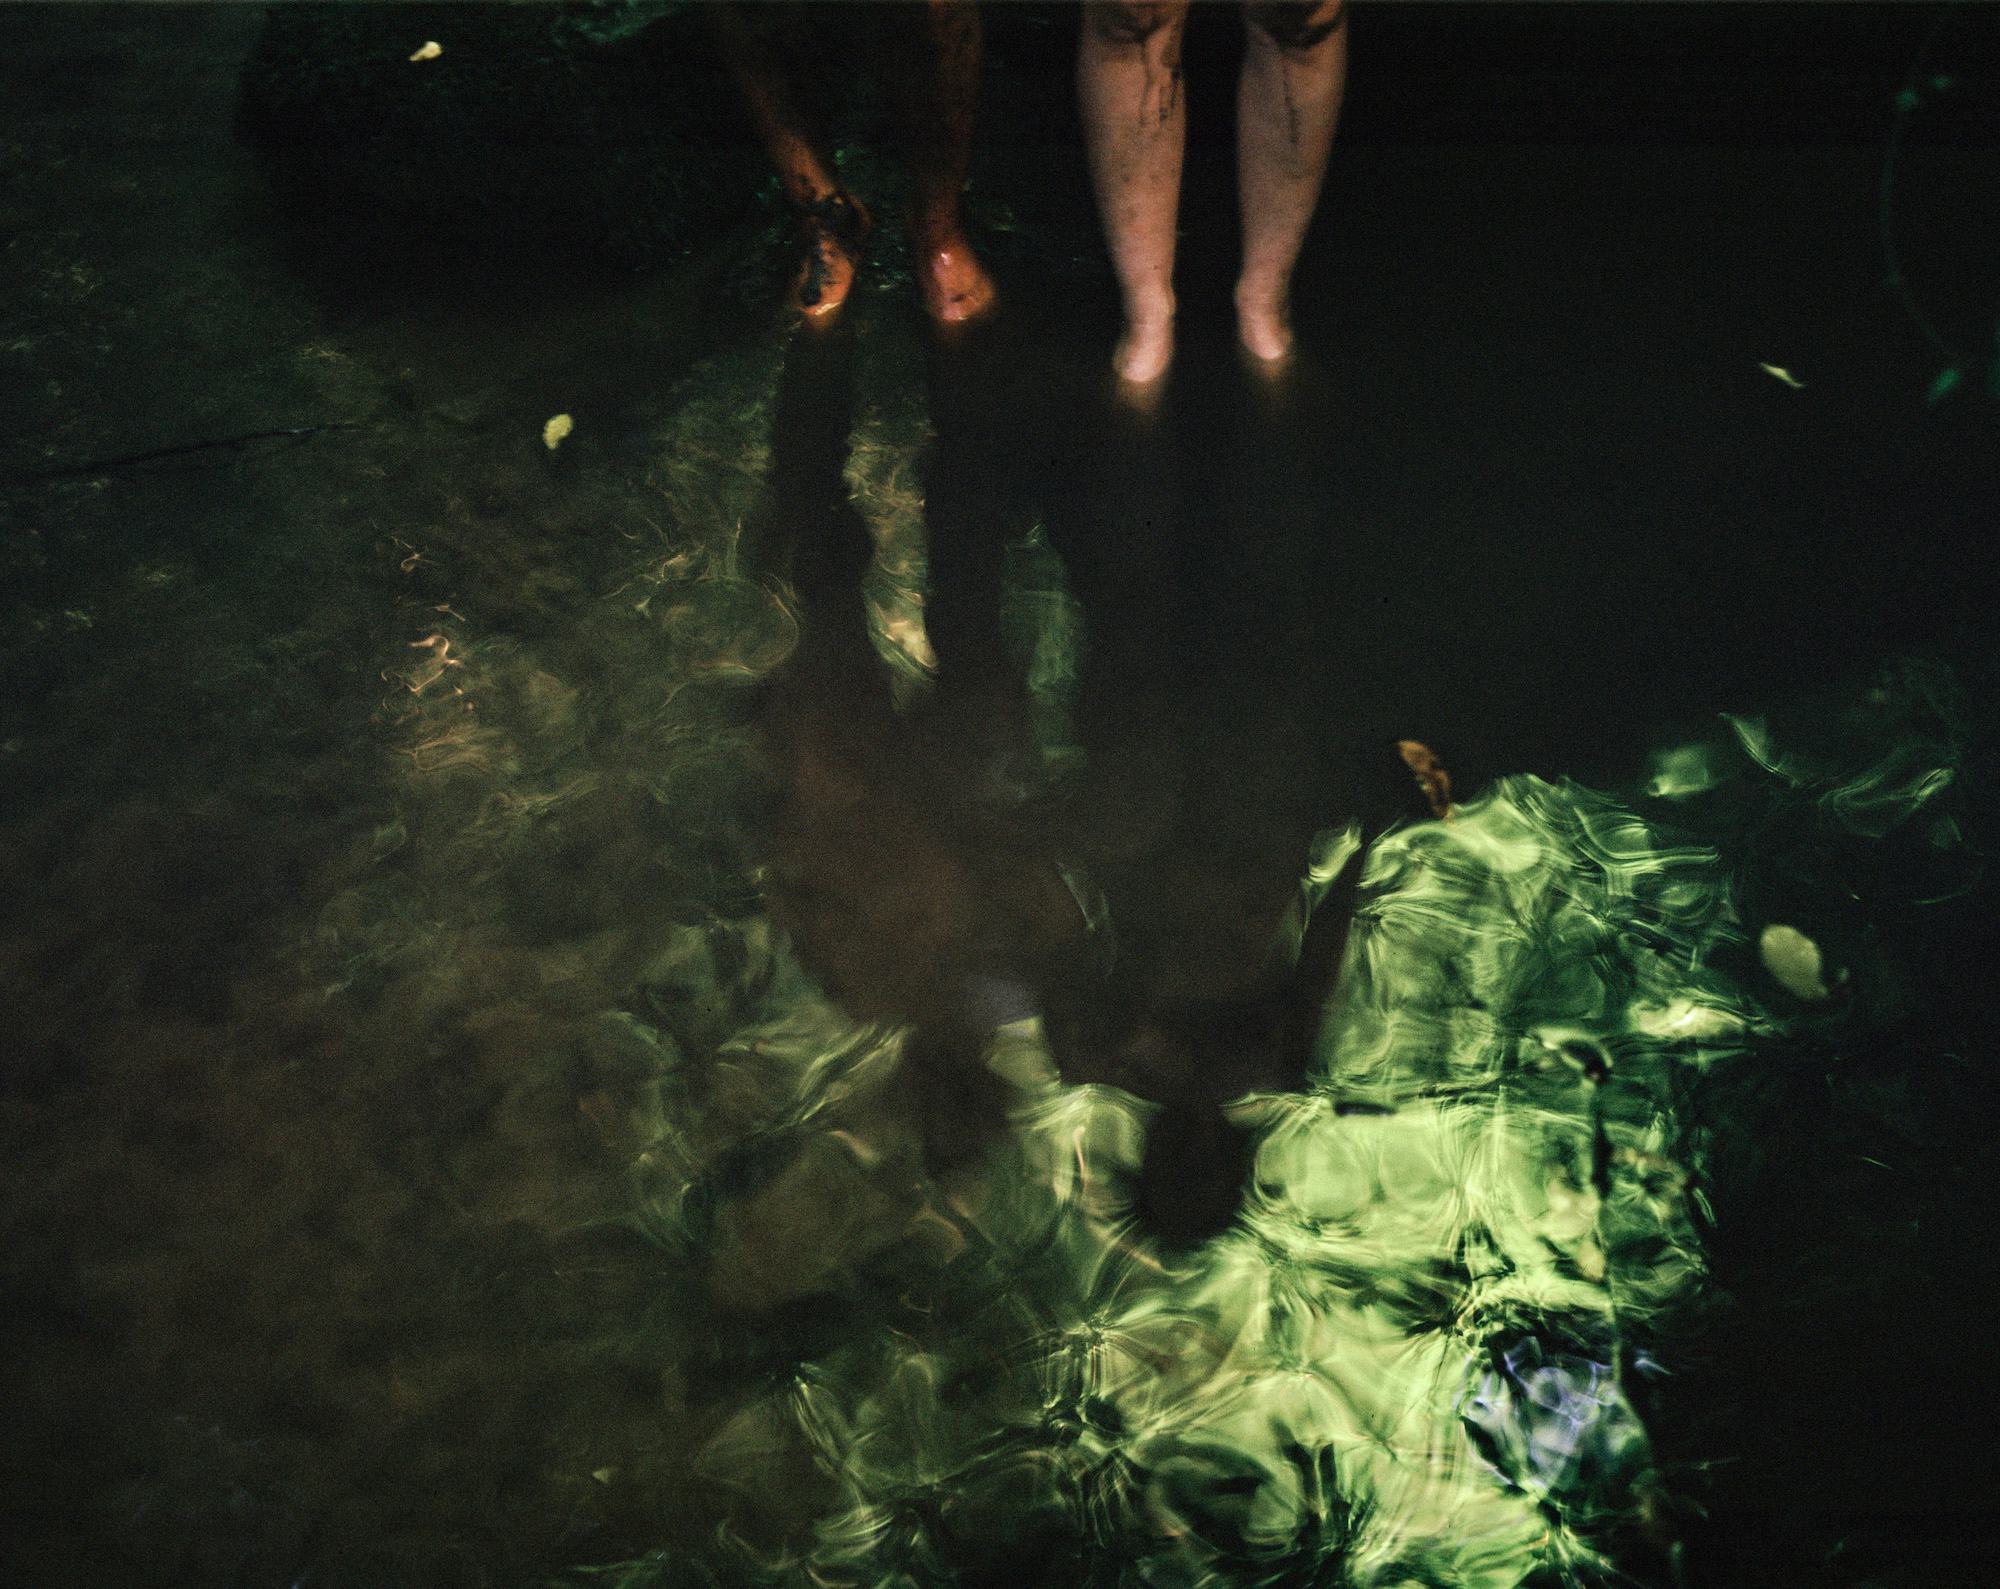 Blurry image showing two pairs of legs standing in greenish water © Cansu Yıldıran